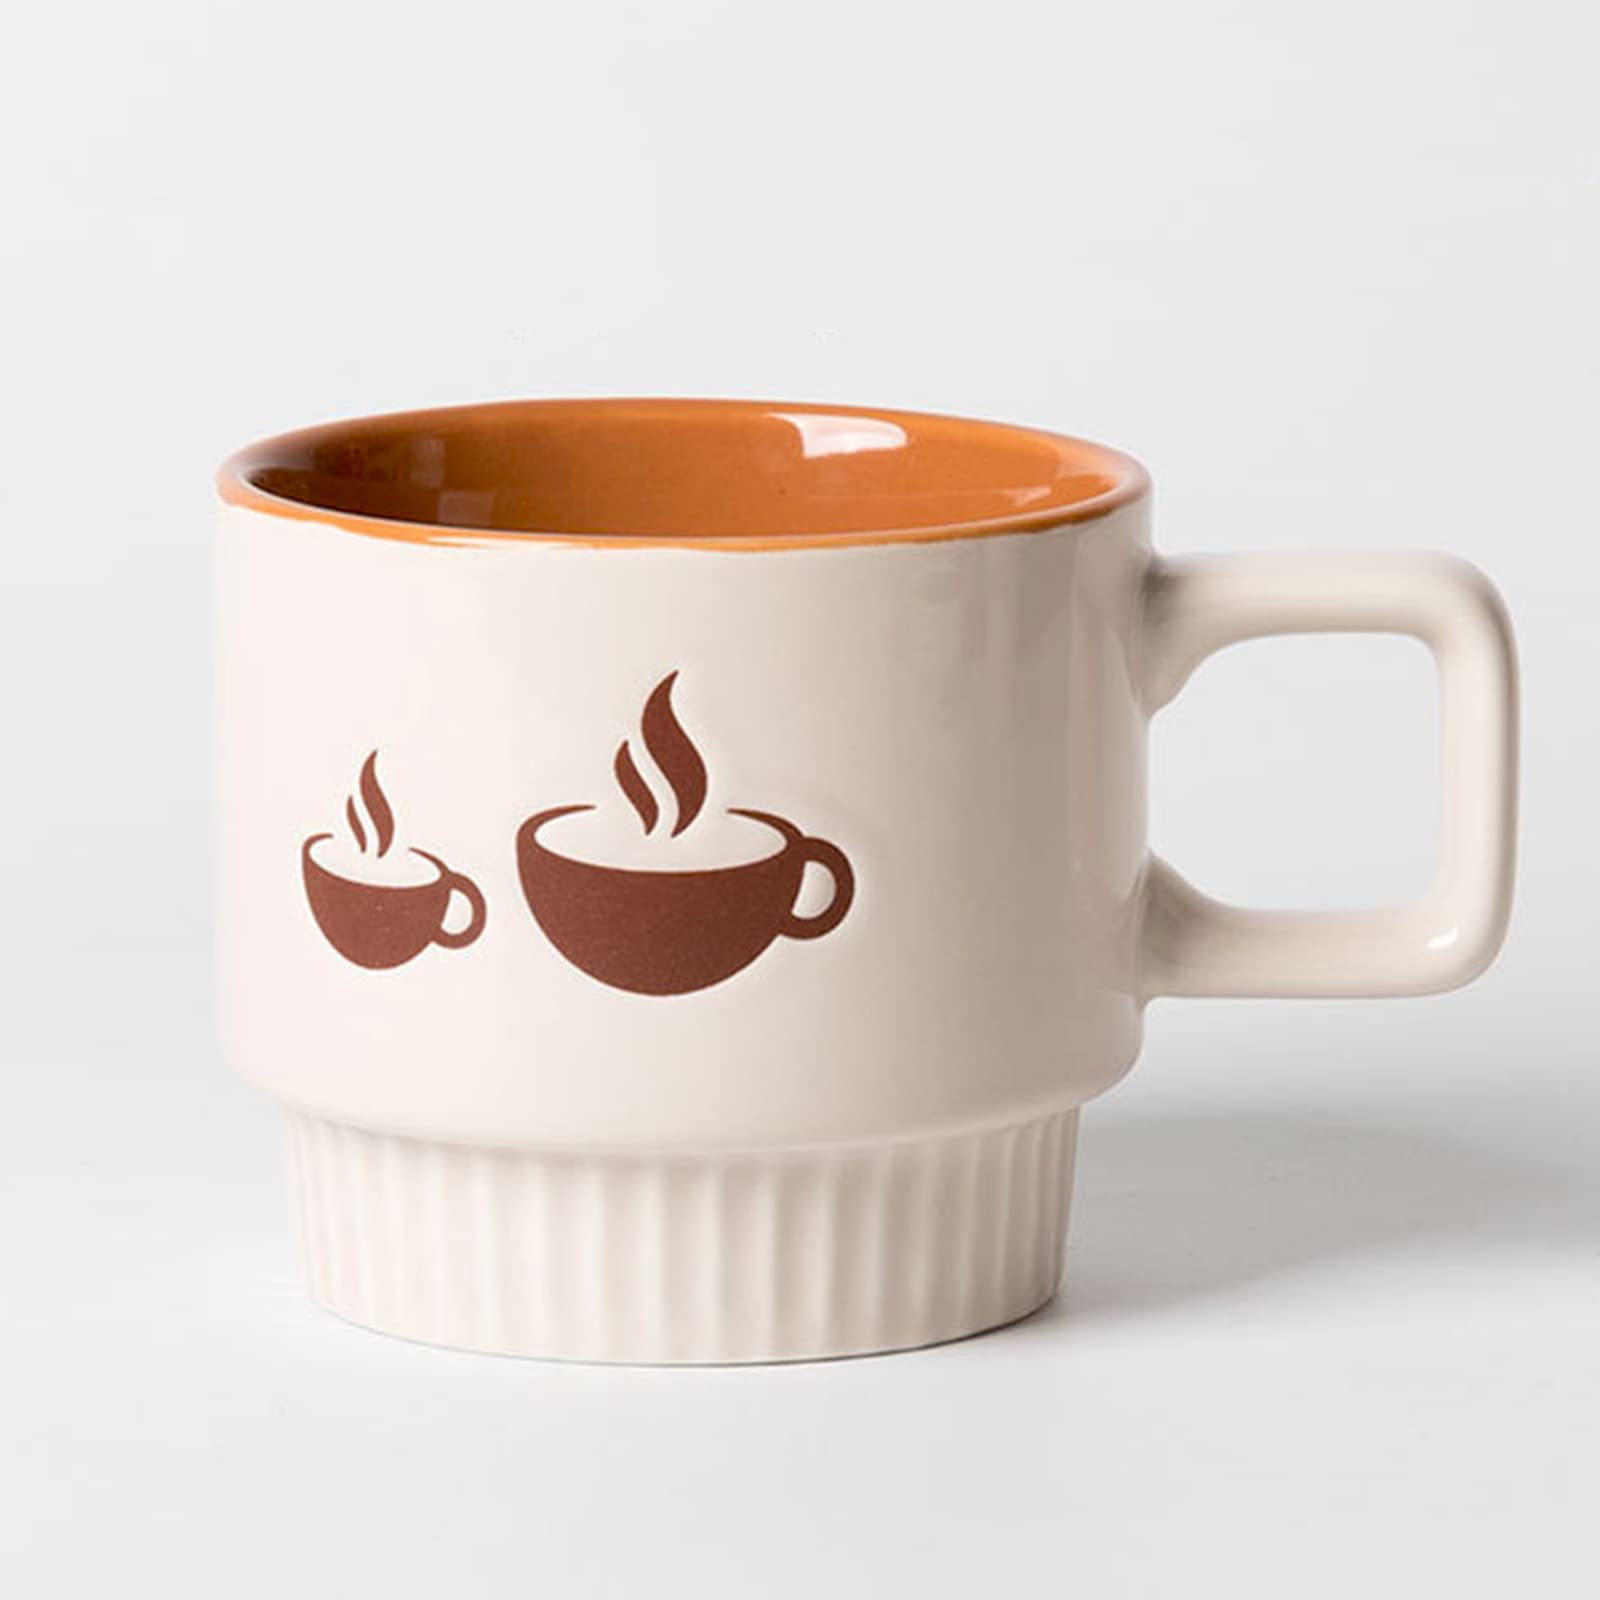 CEIERPH Ceramic Coffee Mug Tea Cup, 11 Oz, Modern Mug Coffee Cups for Espresso,Cappuccino and Latte, Mug and Cup Gifts